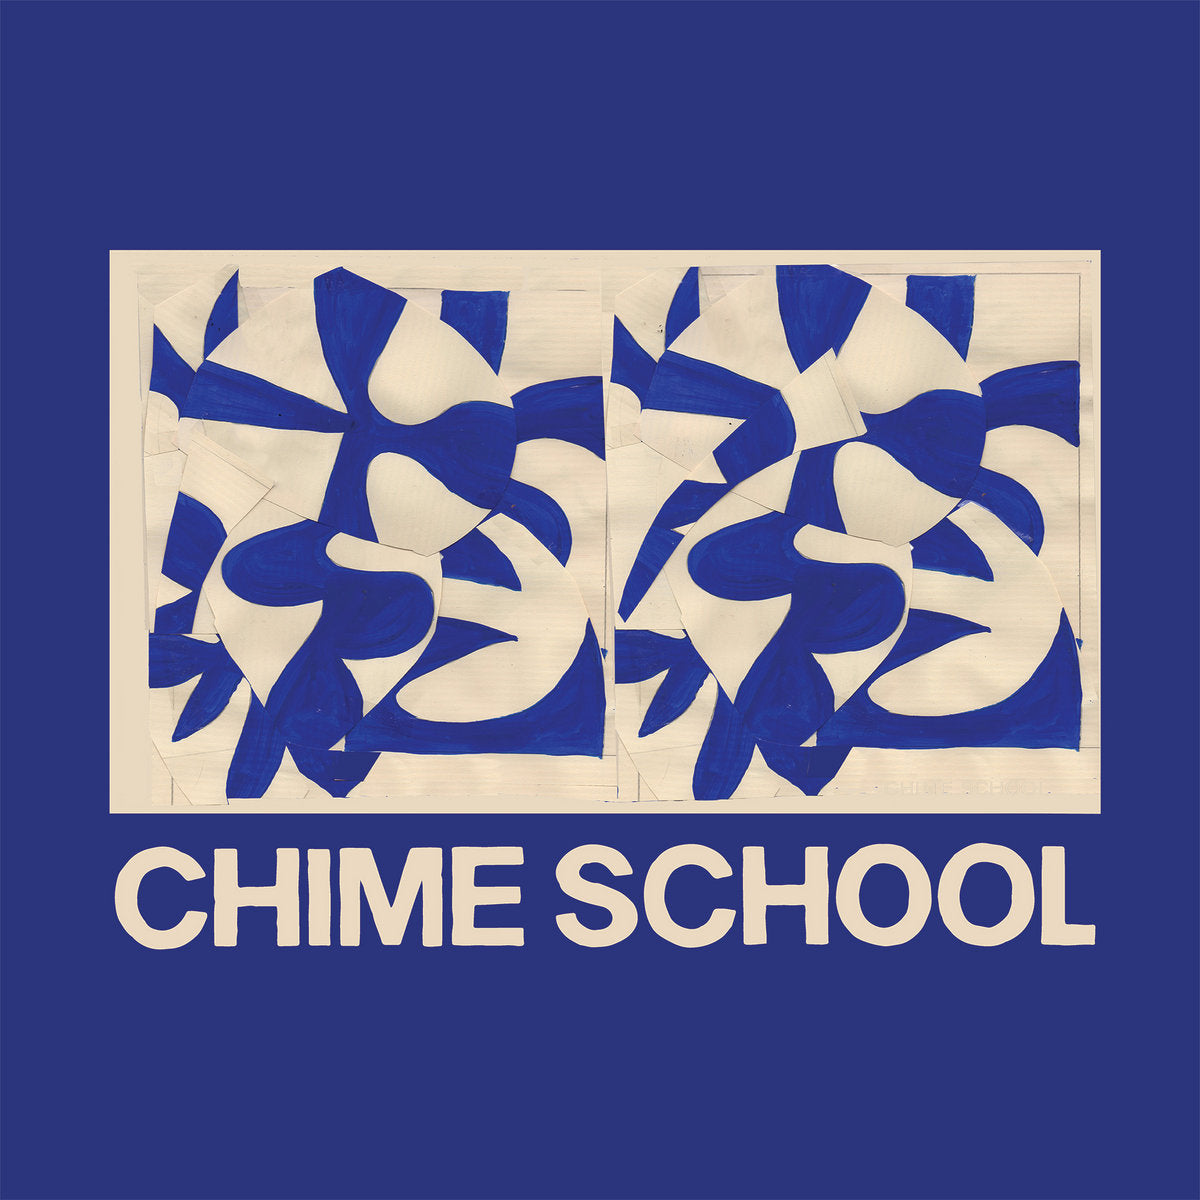 CHIME SCHOOL – Chime School